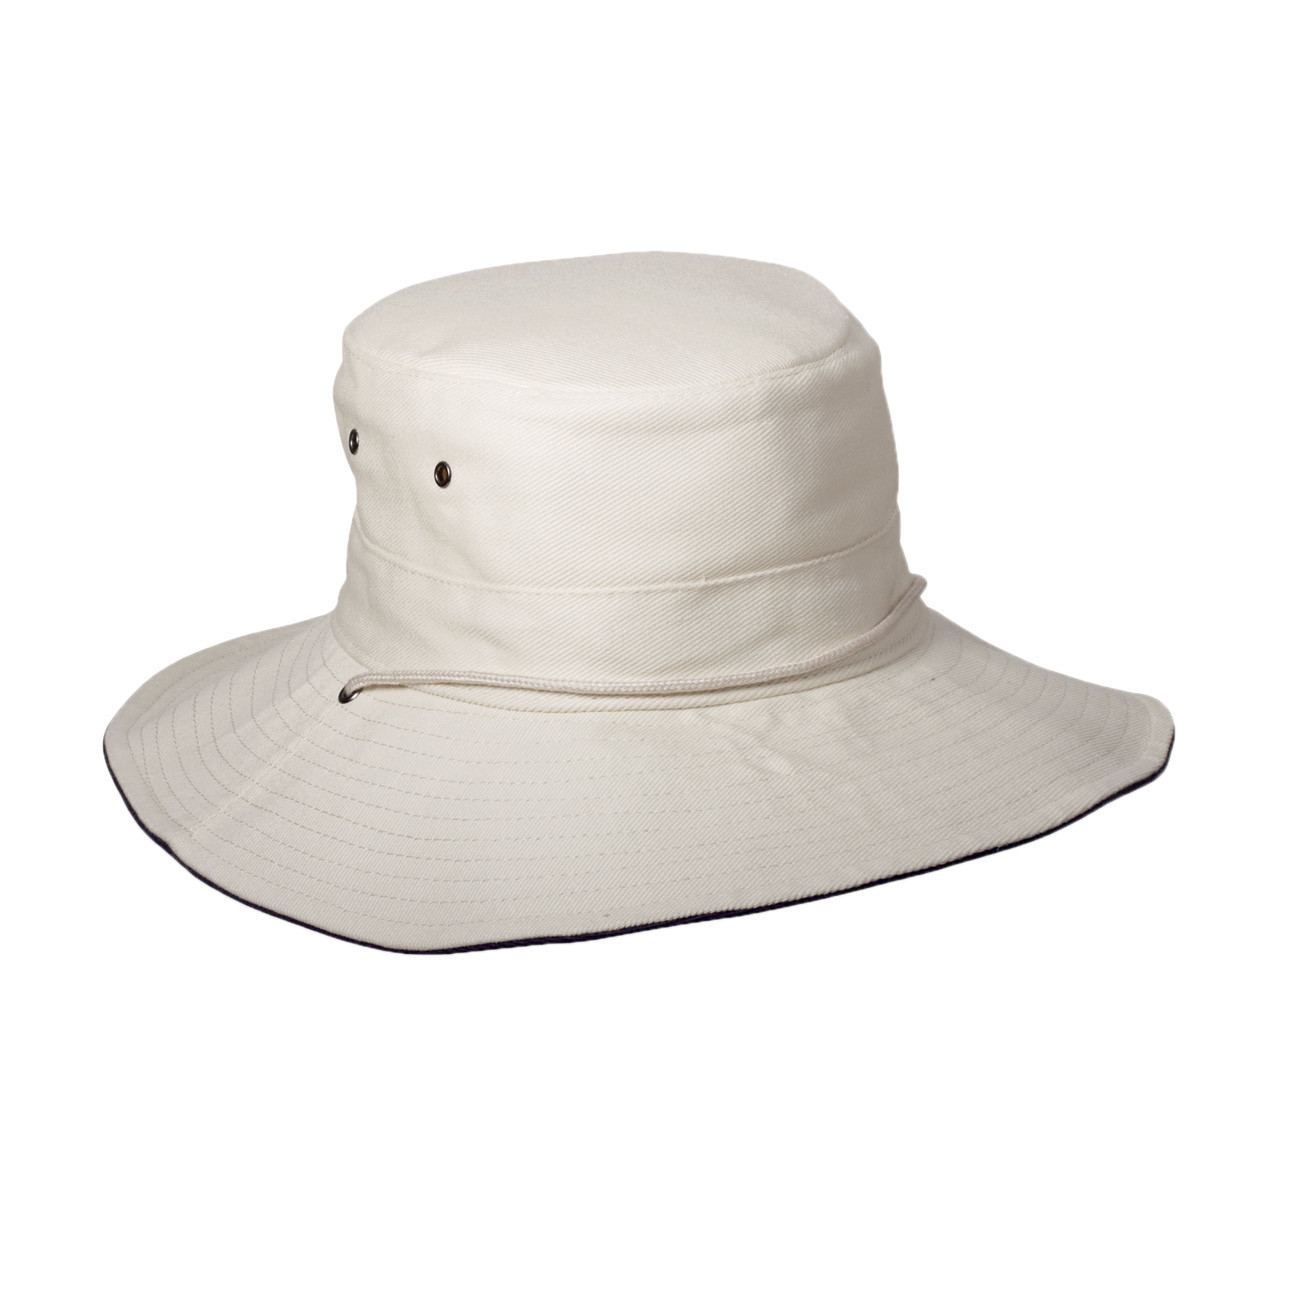 Rigon - UV boonie hat for men - Cream white